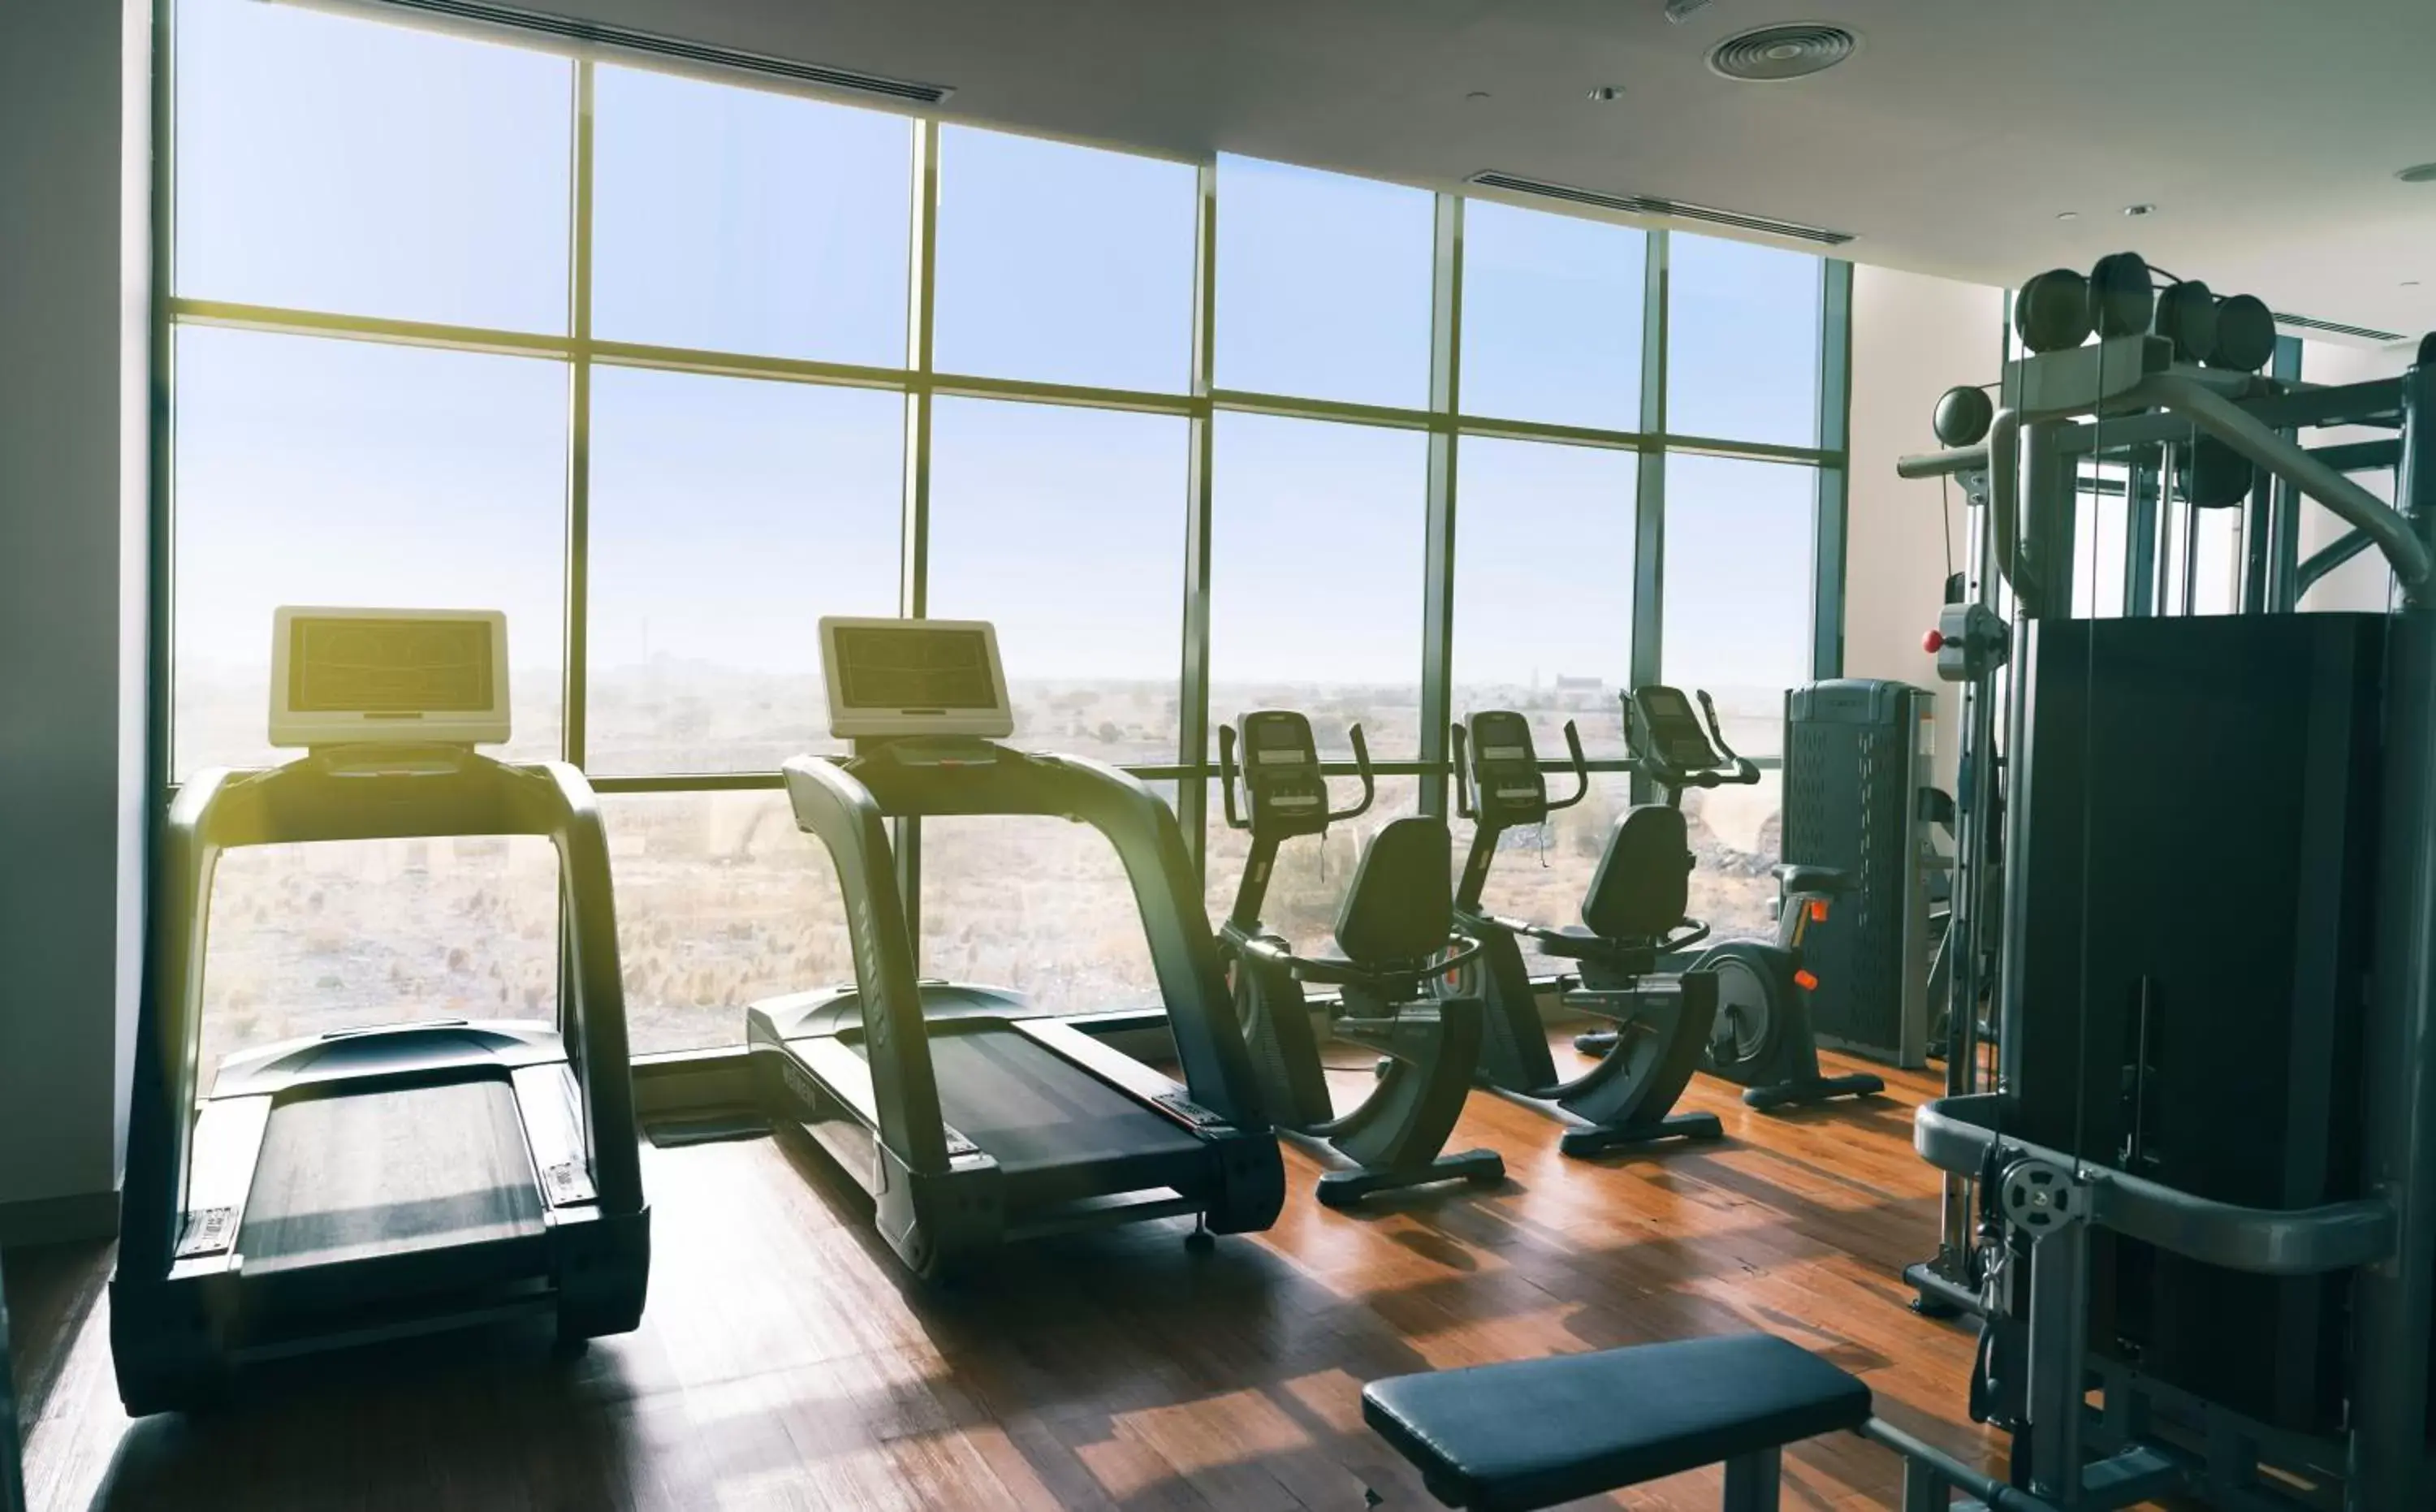 Fitness centre/facilities, Fitness Center/Facilities in Boulevard Hotel Oman